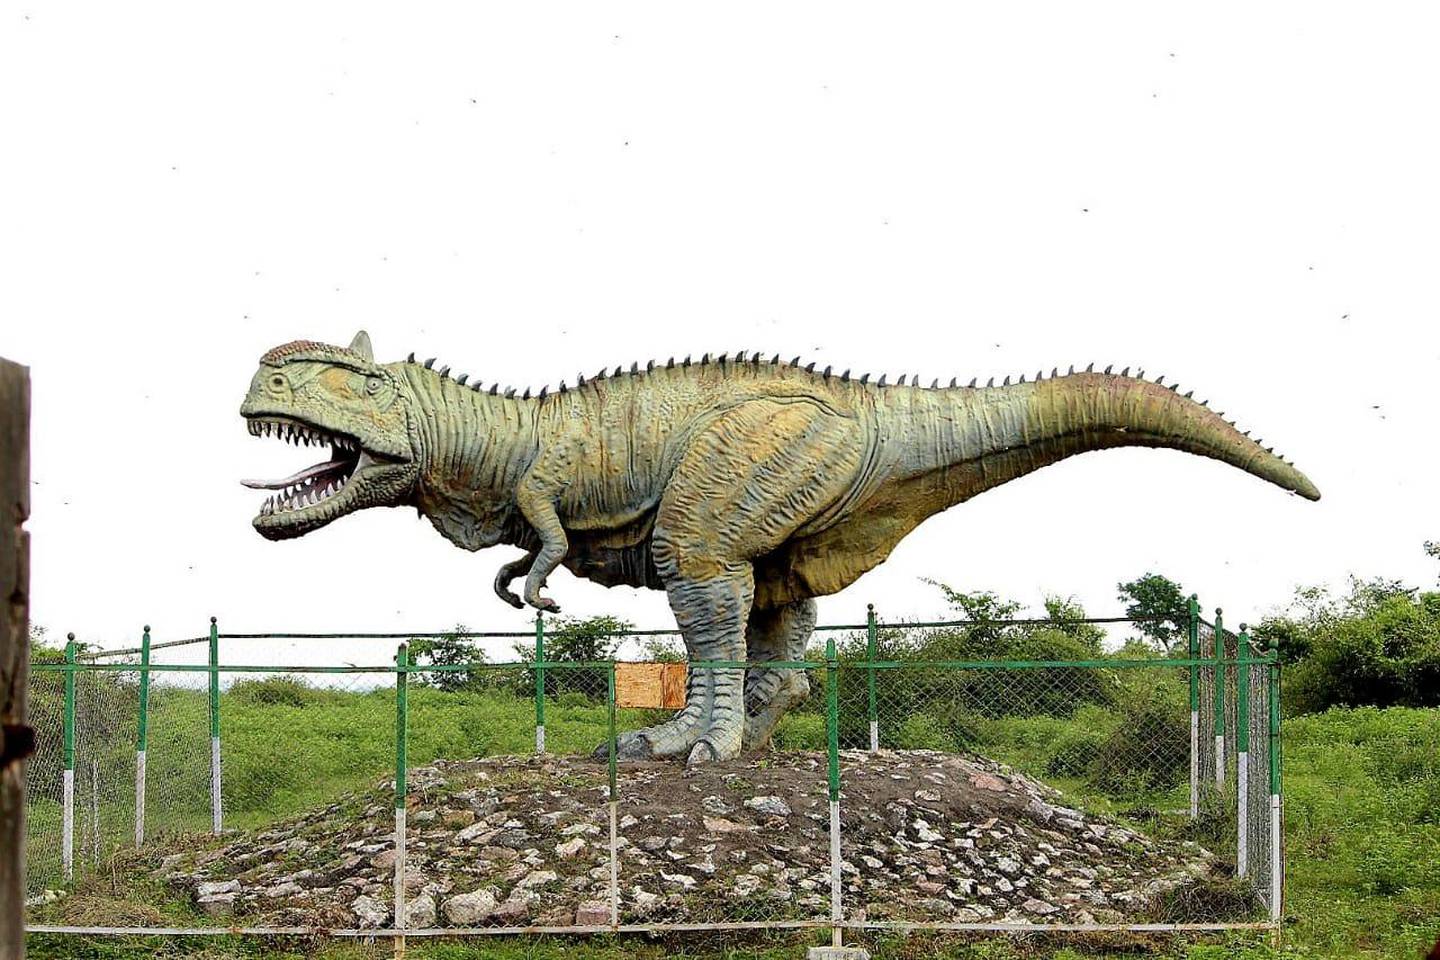 The Dinosaur Museum opened in 2019 in Balasinor. Courtesy Khursheed Dinshaw